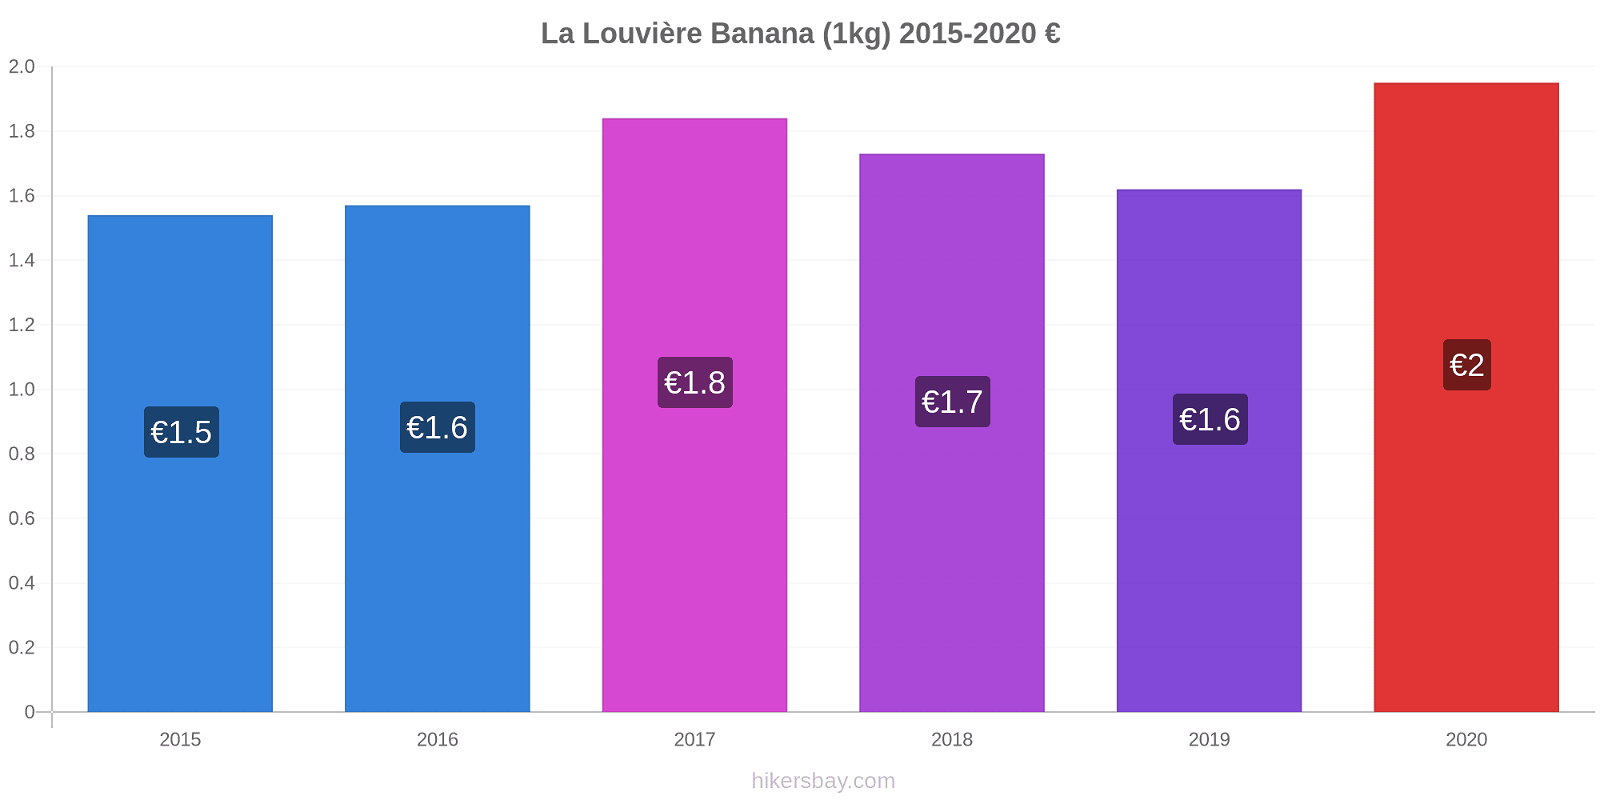 La Louvière modificări de preț Banana (1kg) hikersbay.com